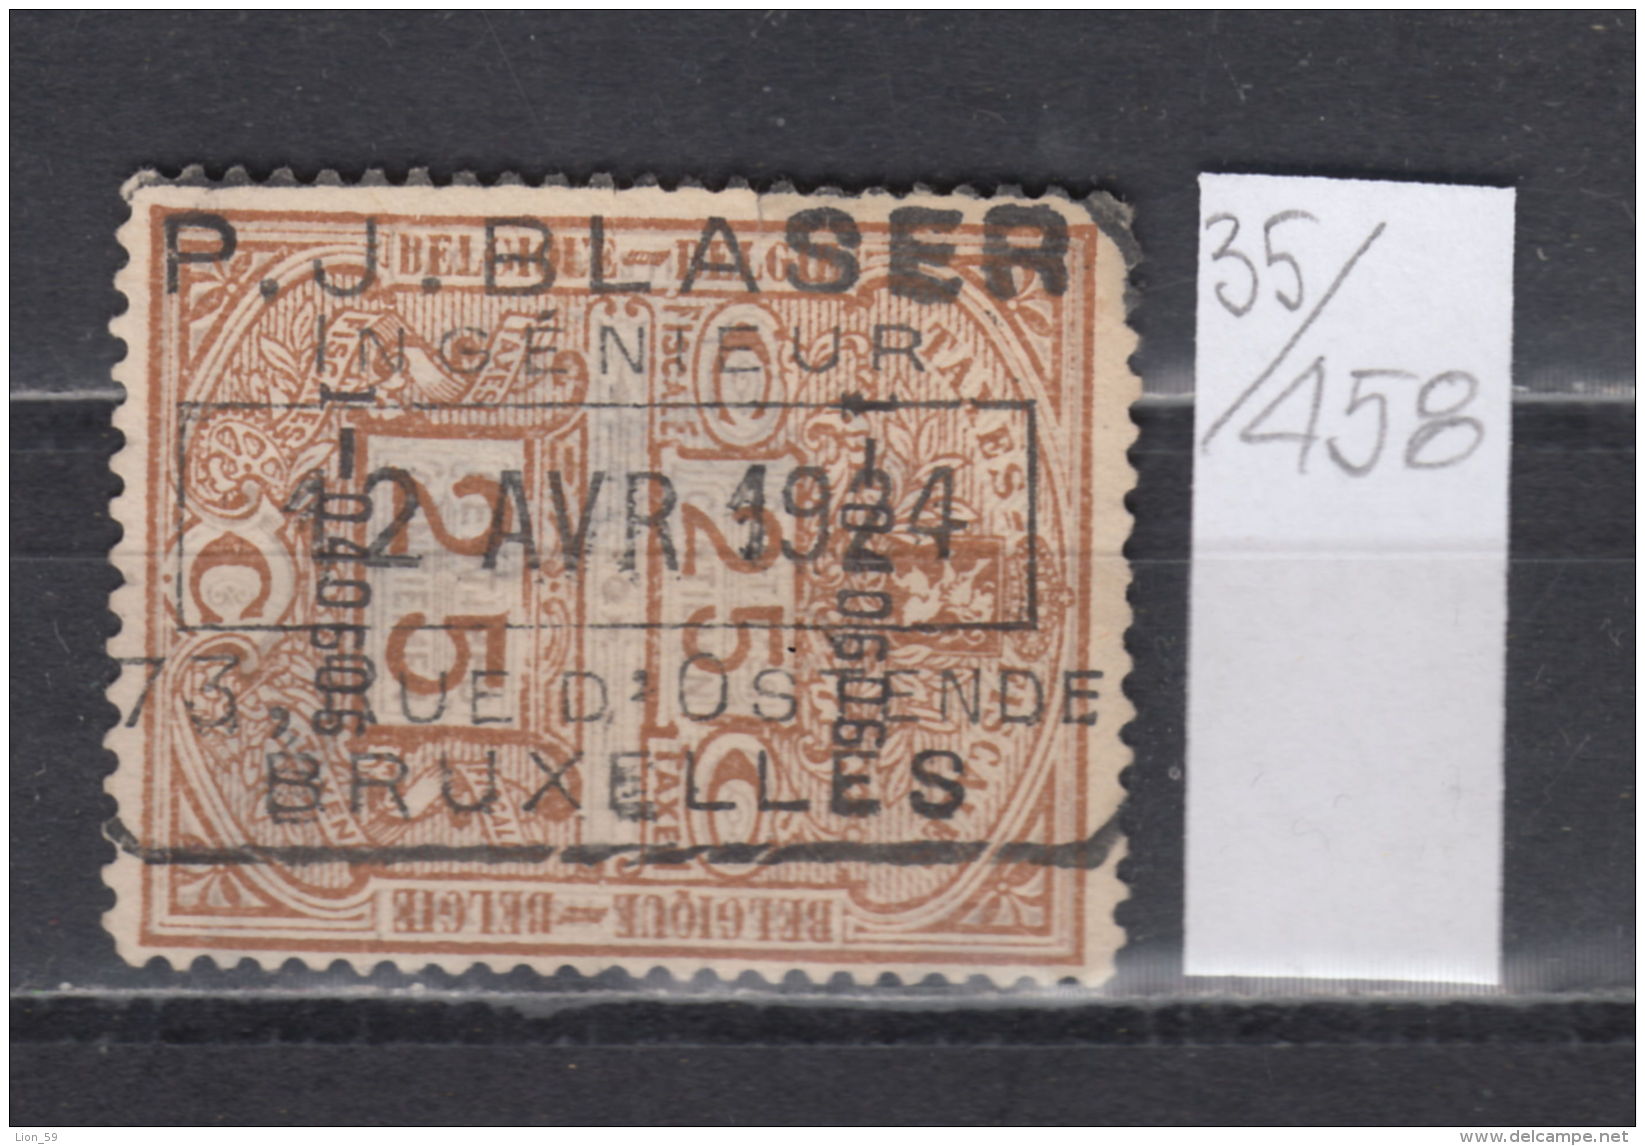 35K458 / 1924 - 25 C. TAXES FISCALES , RAILWAY P.J. BLASER - BRUXELLES , Revenue Fiscaux Steuermarken , Belgique Belgium - Postzegels